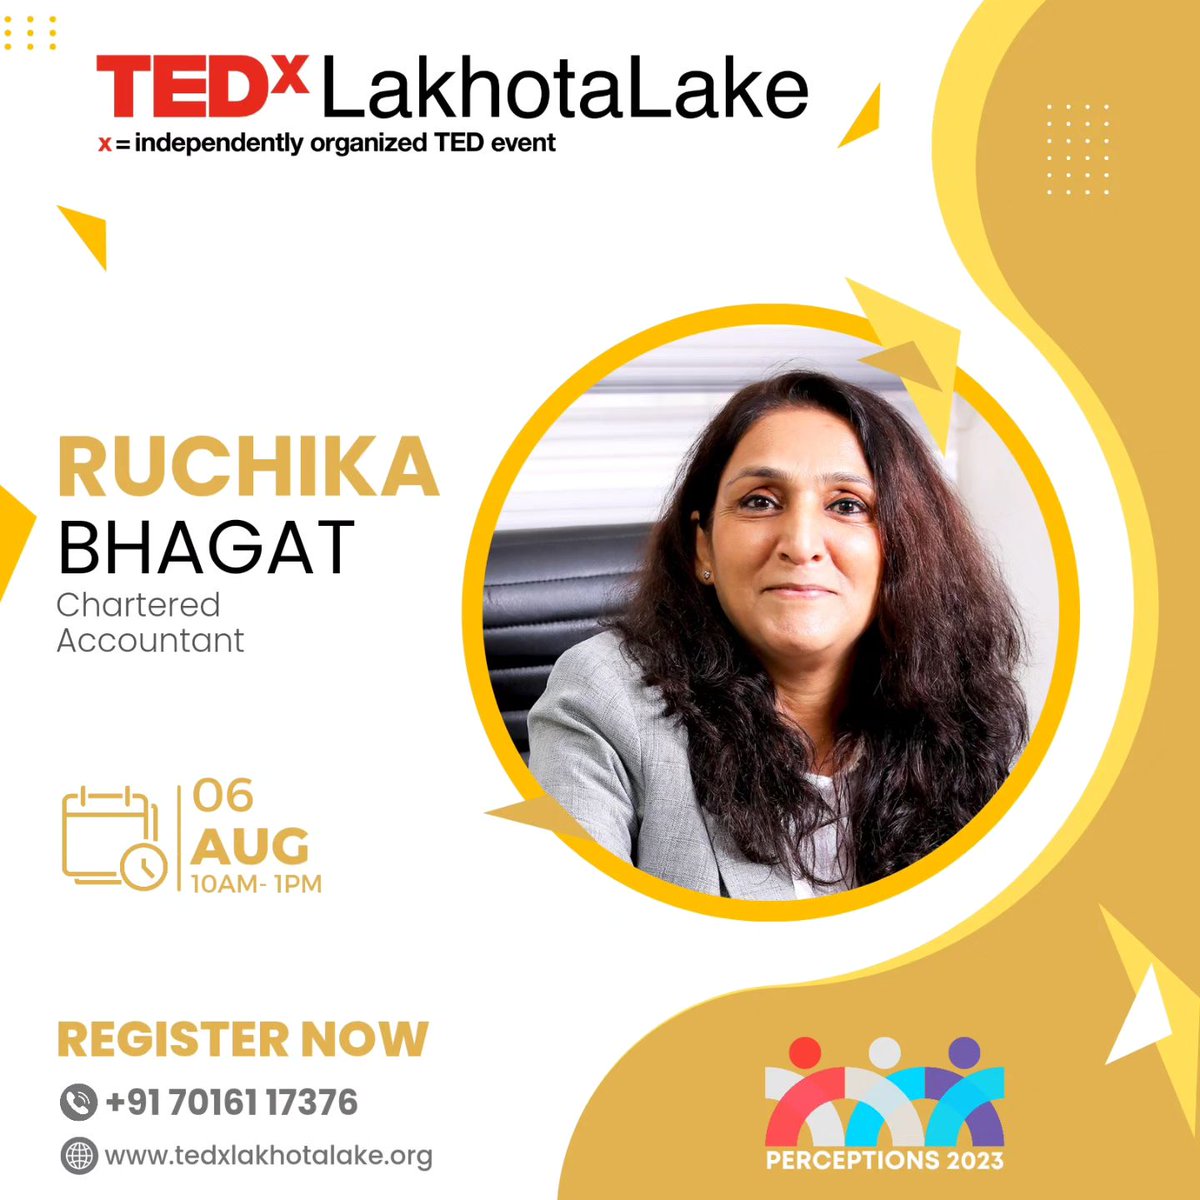 New Beginning New Possibility & New Adventure

Watch, Listen & Meet CA 𝐑𝐮𝐜𝐡𝐢𝐤𝐚 𝐁𝐡𝐚𝐠𝐚𝐭 at #TEDxLakhotaLake 2023: PERCEPTIONS!

#TED #TEDx #Perceptions #Speakers #SpeakerAlert #SpeakerAnnouncements #Jamnagar #motivation #specialistfinance #nbc

lnkd.in/dVdGx9_T